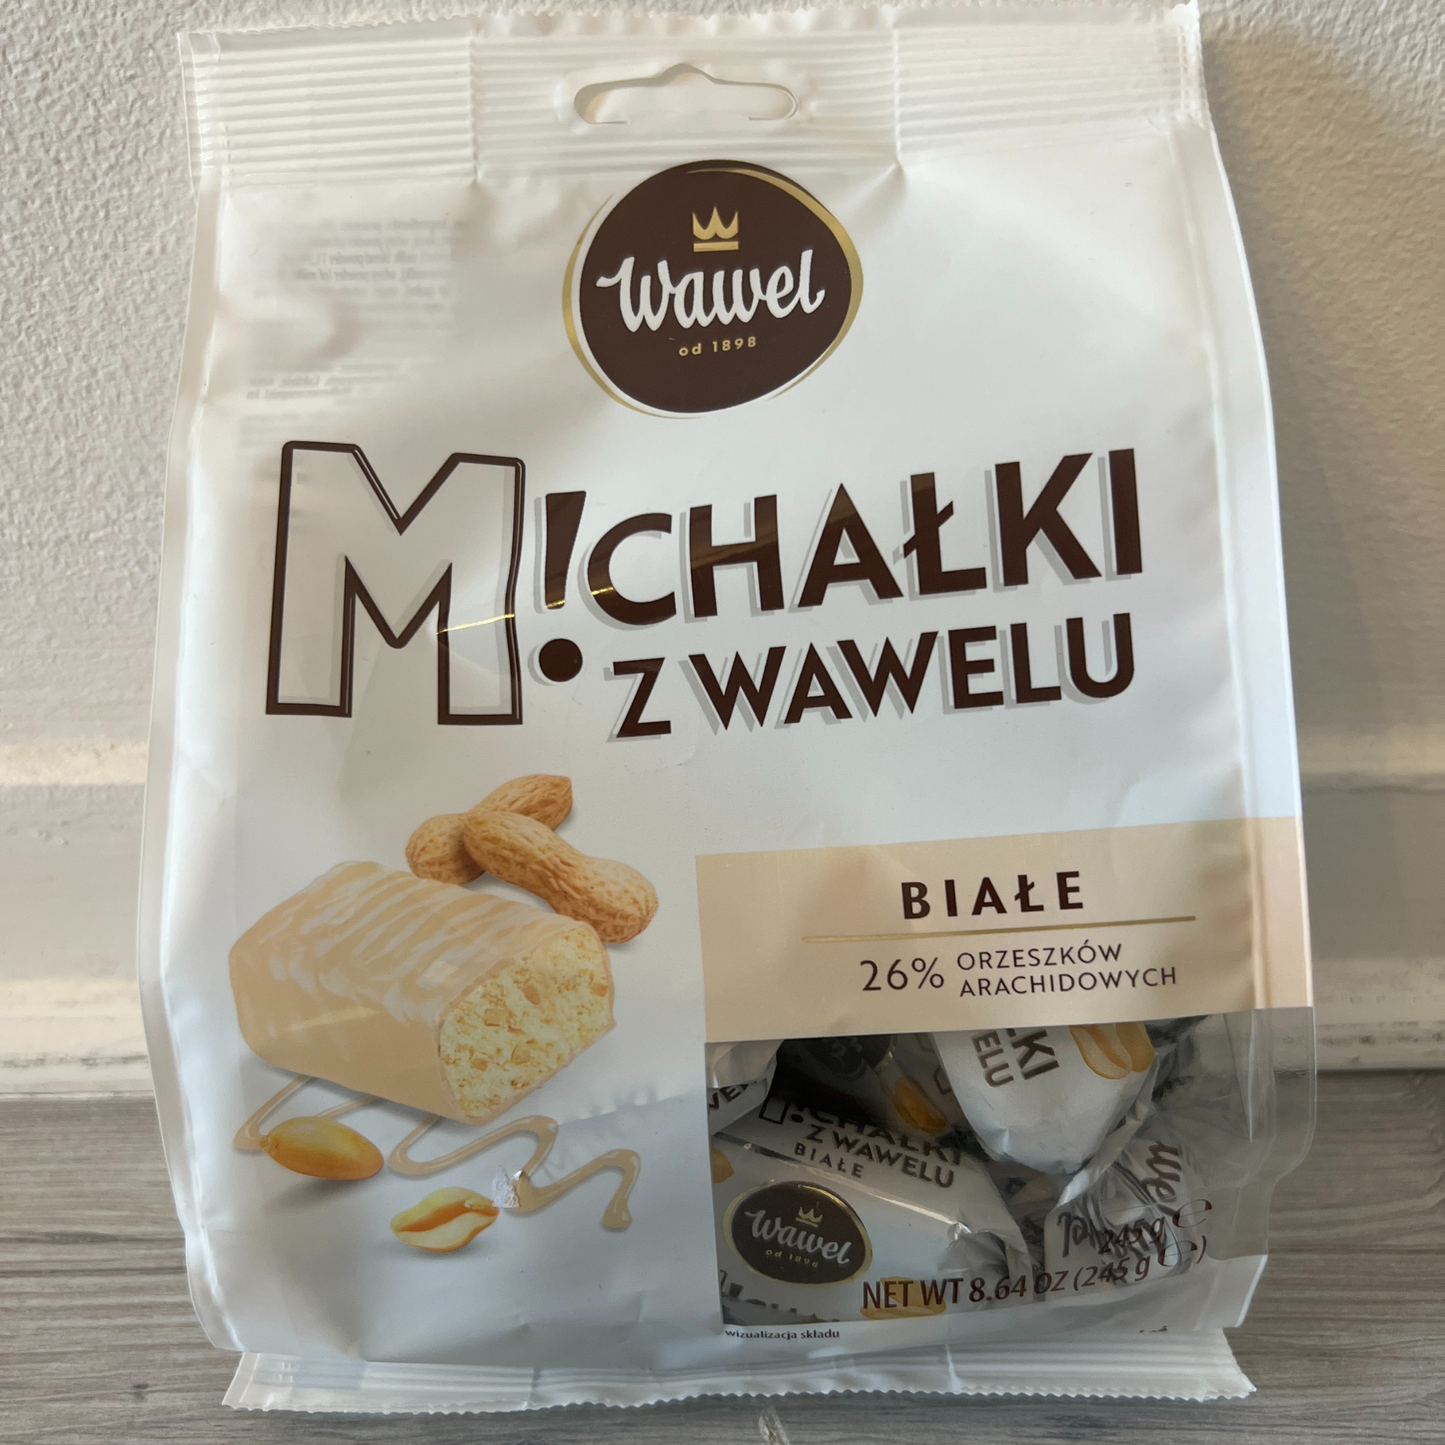 Chocolats Michałki